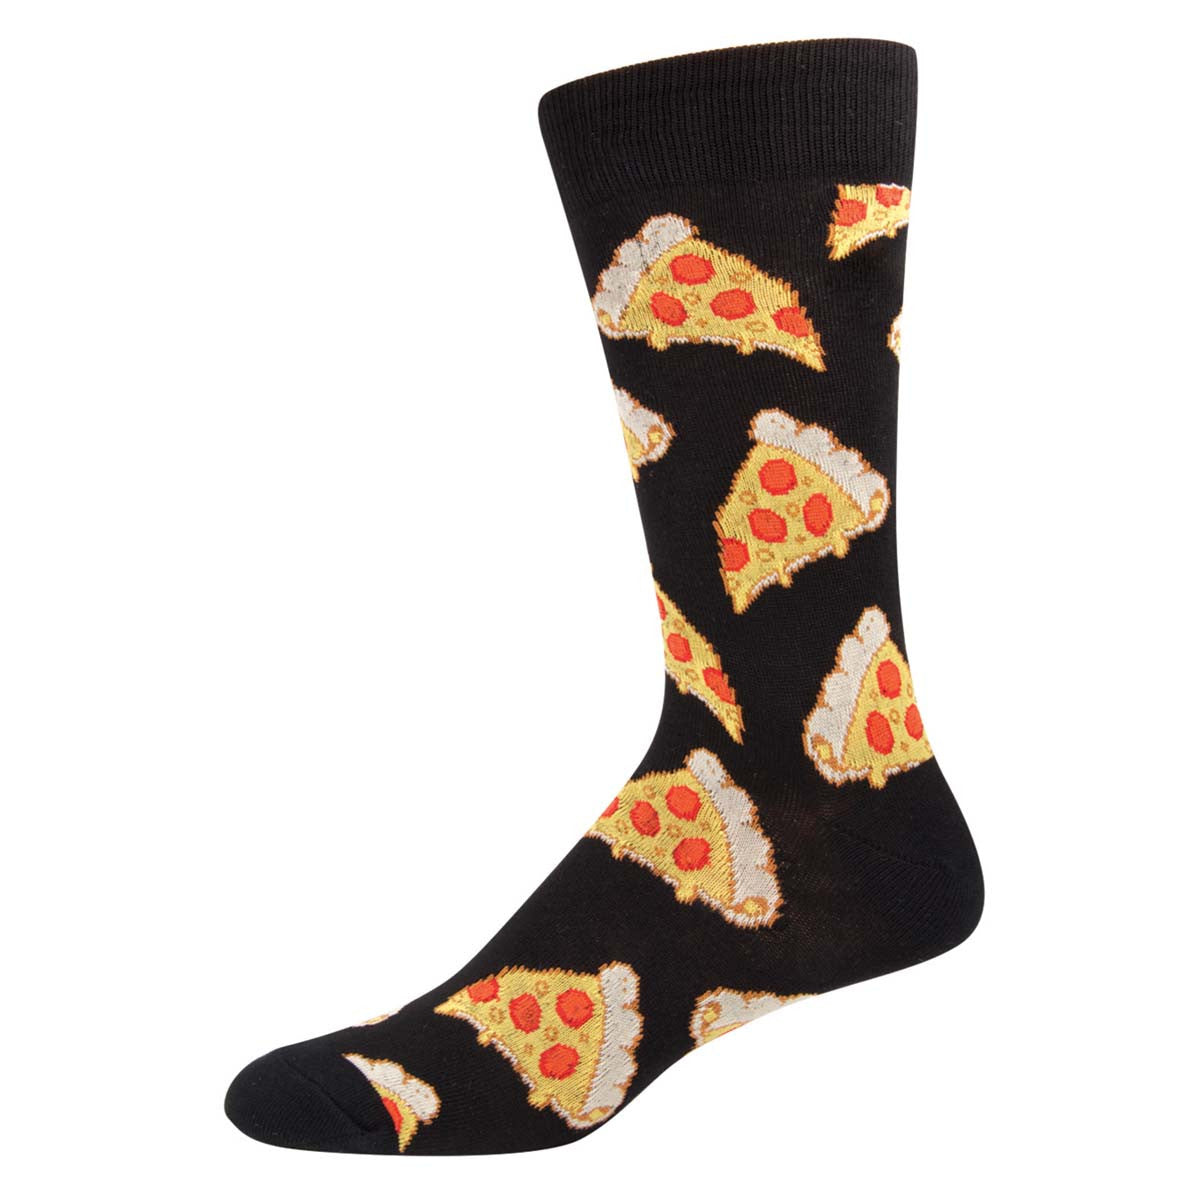 Mens Pizza Slice Crew Socks - HalfMoonMusic